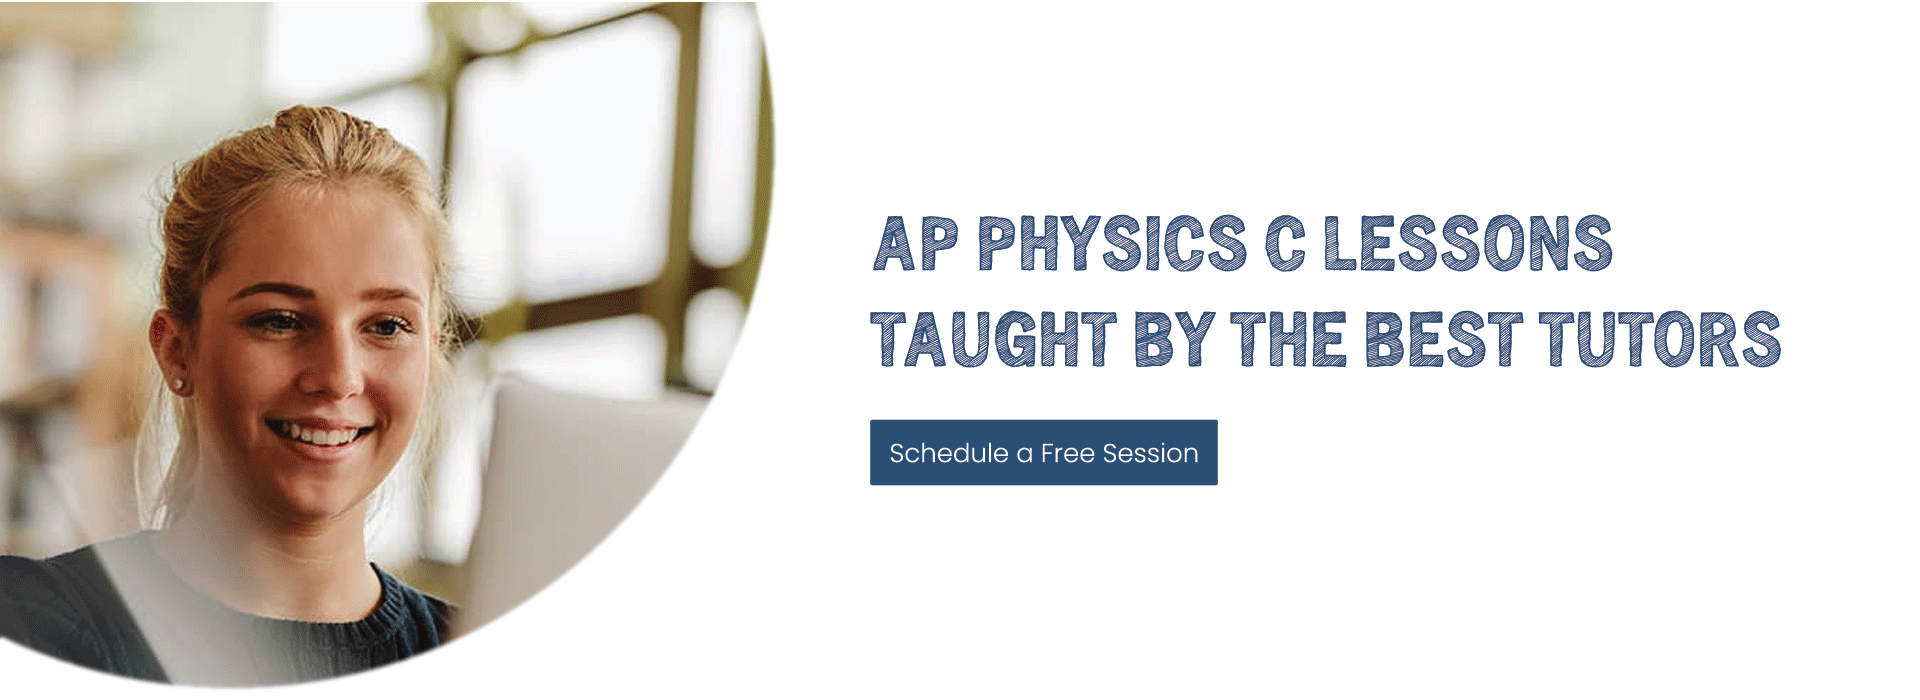 Online Tutoring on AP Physics